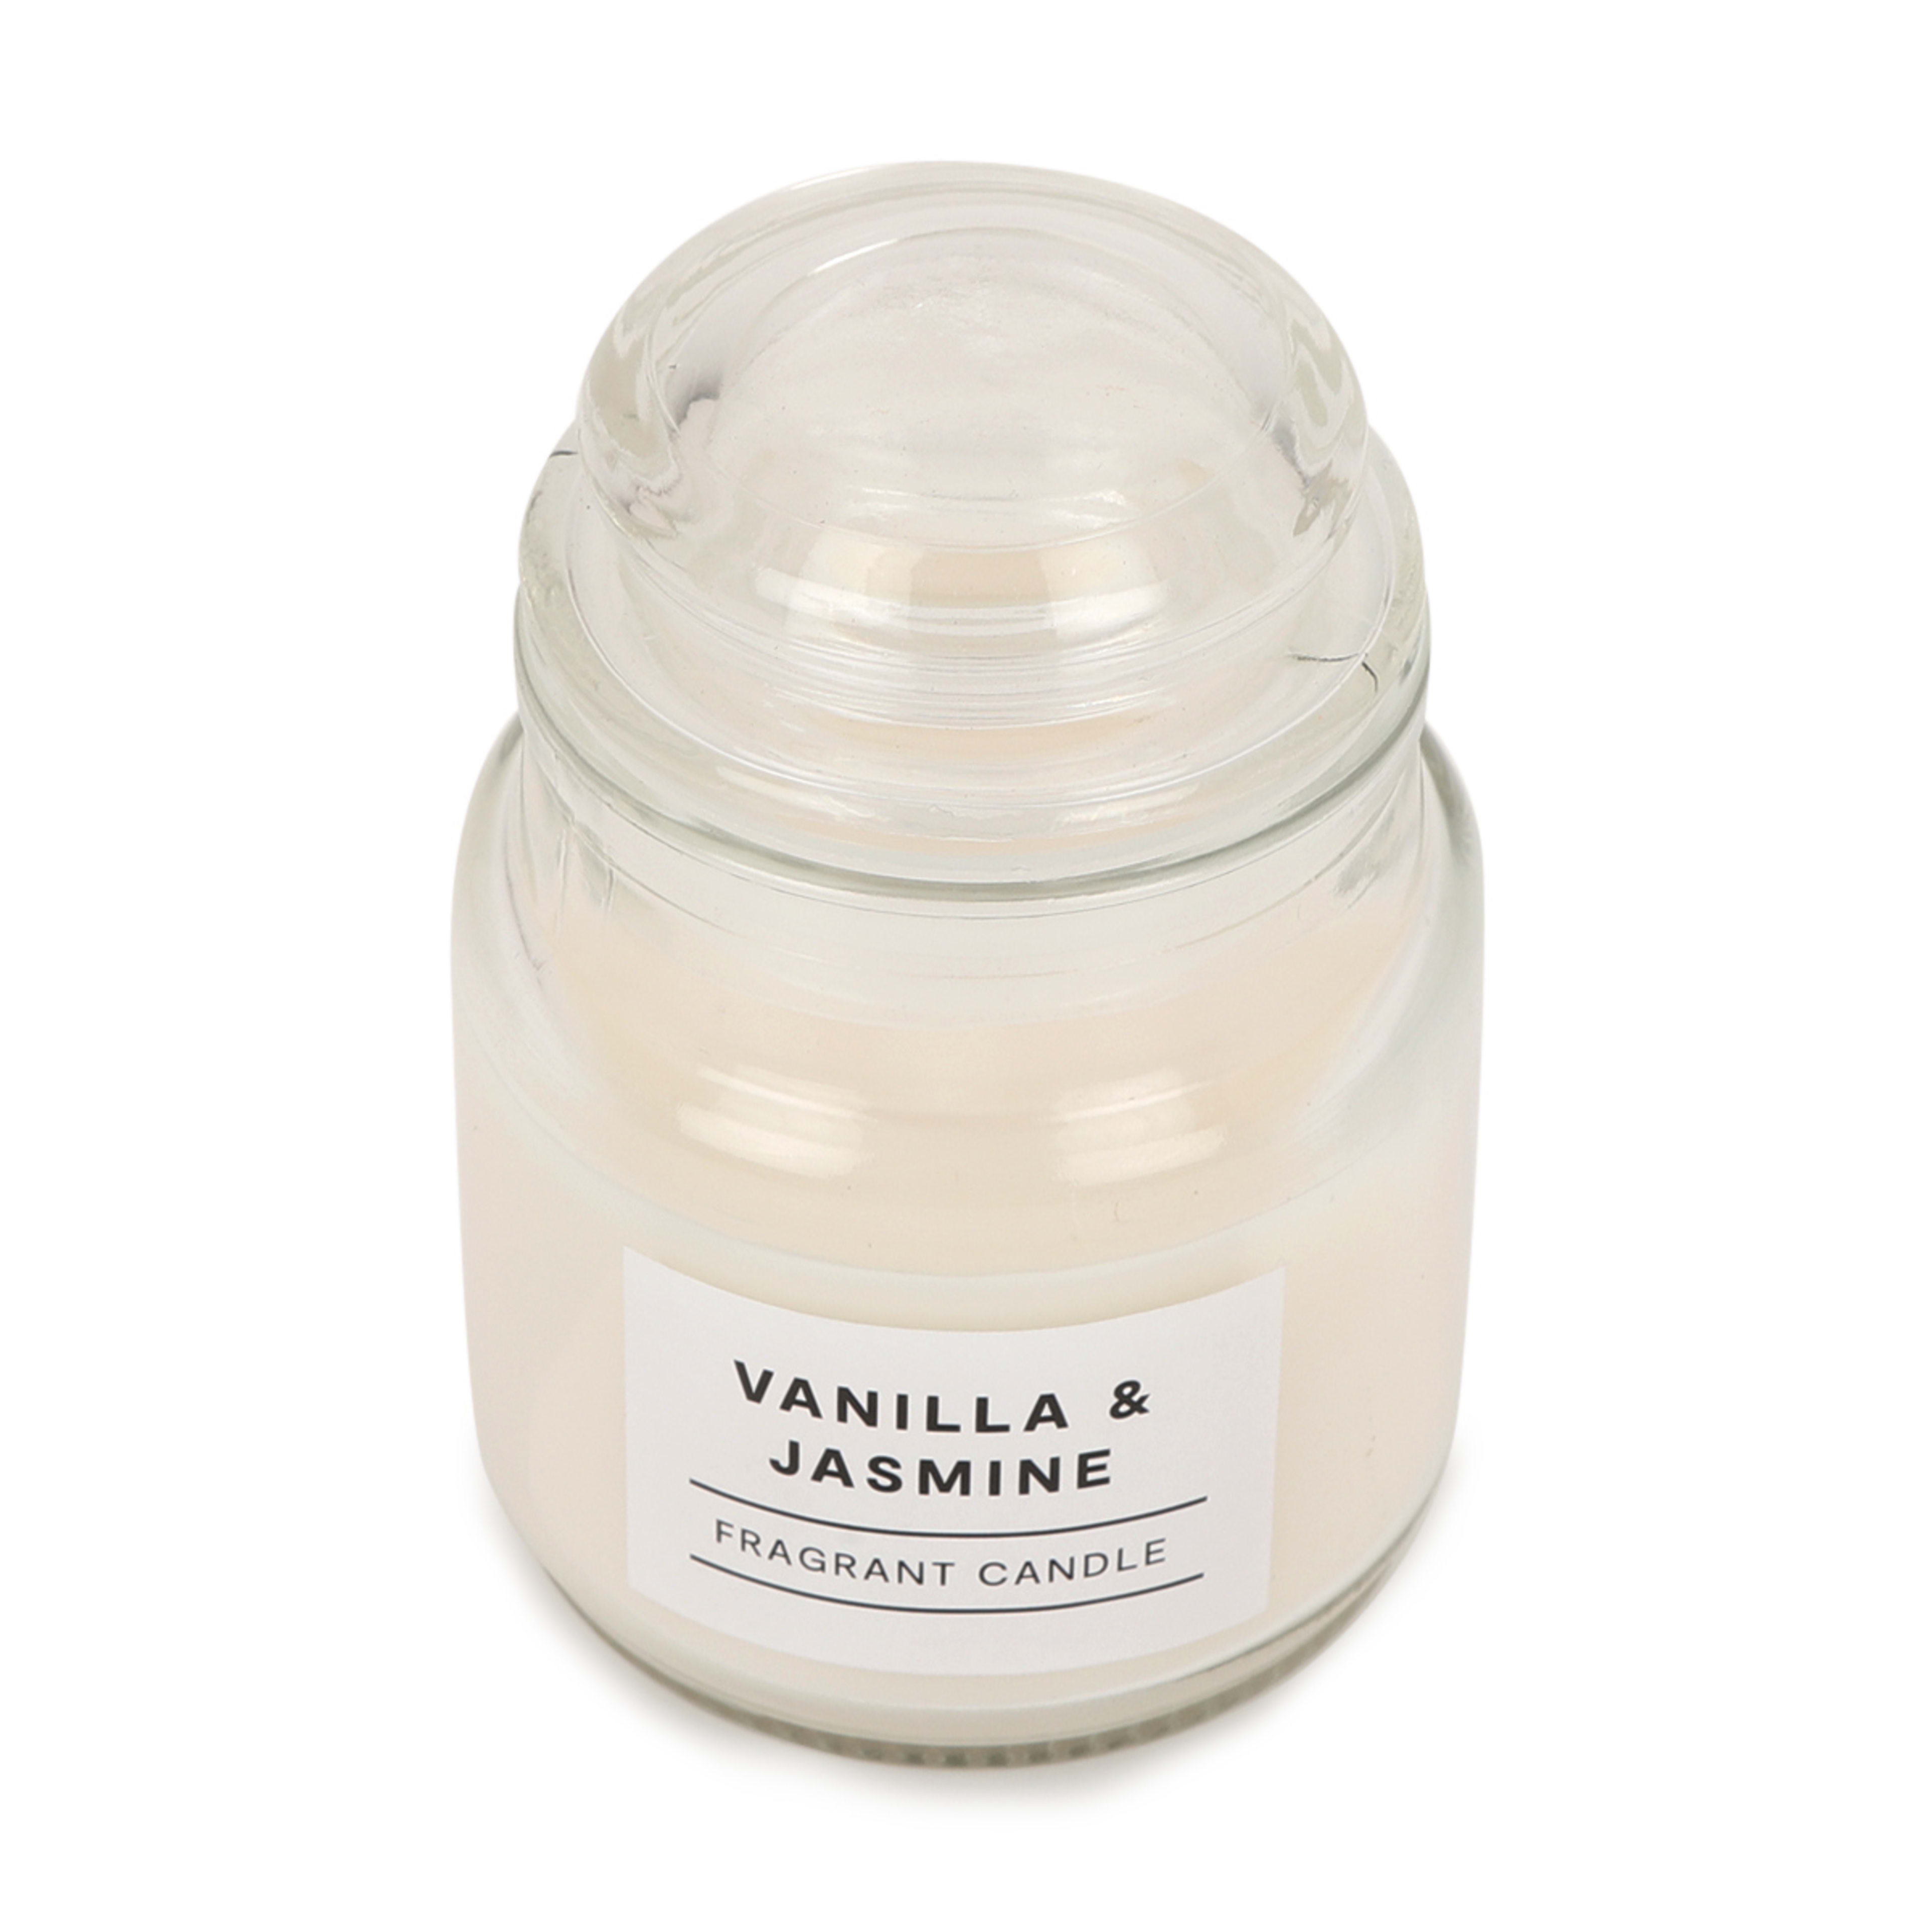 Vanilla and Jasmine Fragrant Candle